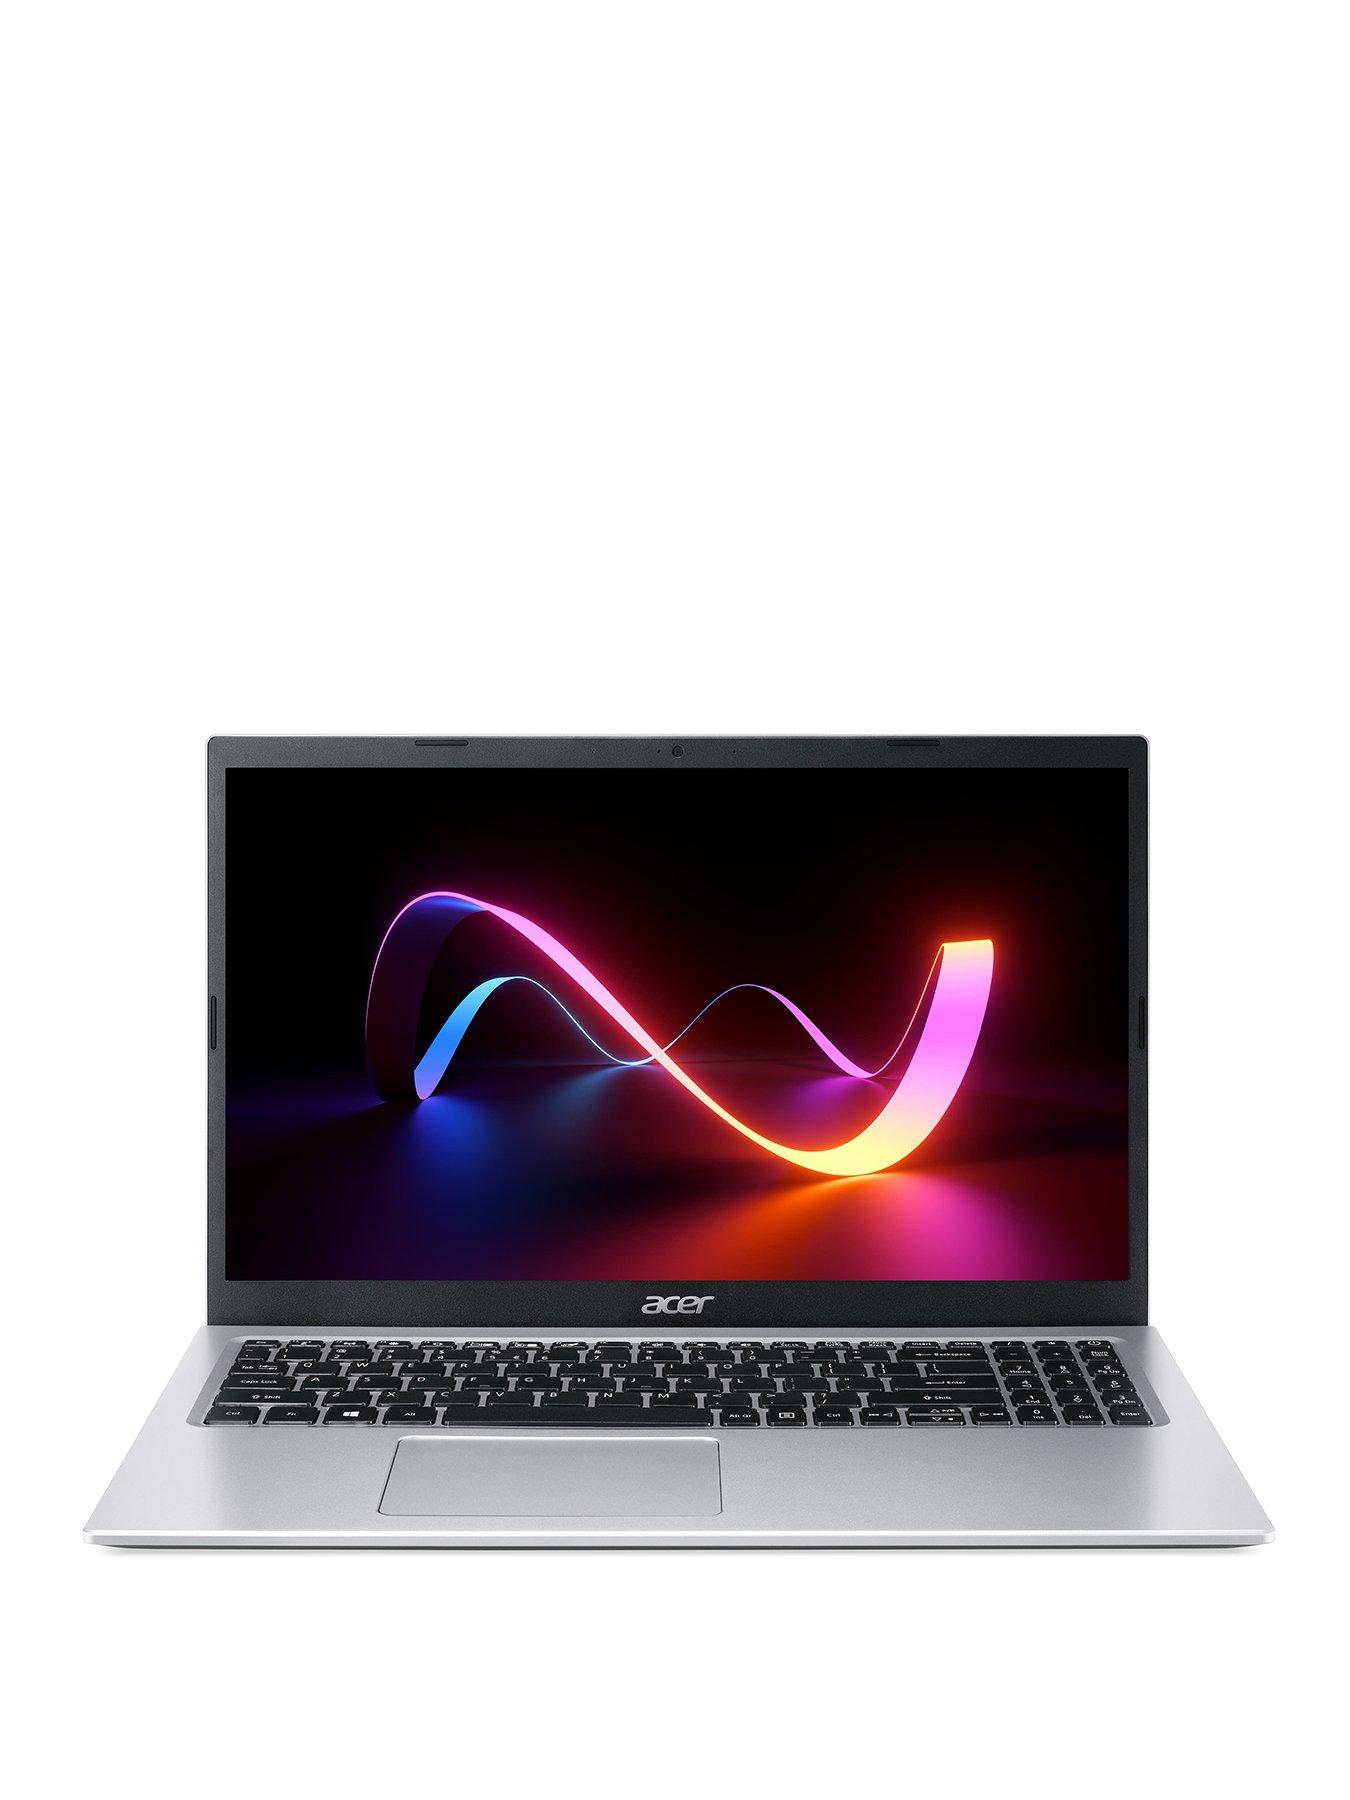 Acer Aspire 1 Laptop - 15.6In Fhd, Intel Pentium, 4Gb Ram, 128Gb Ssd - Silver